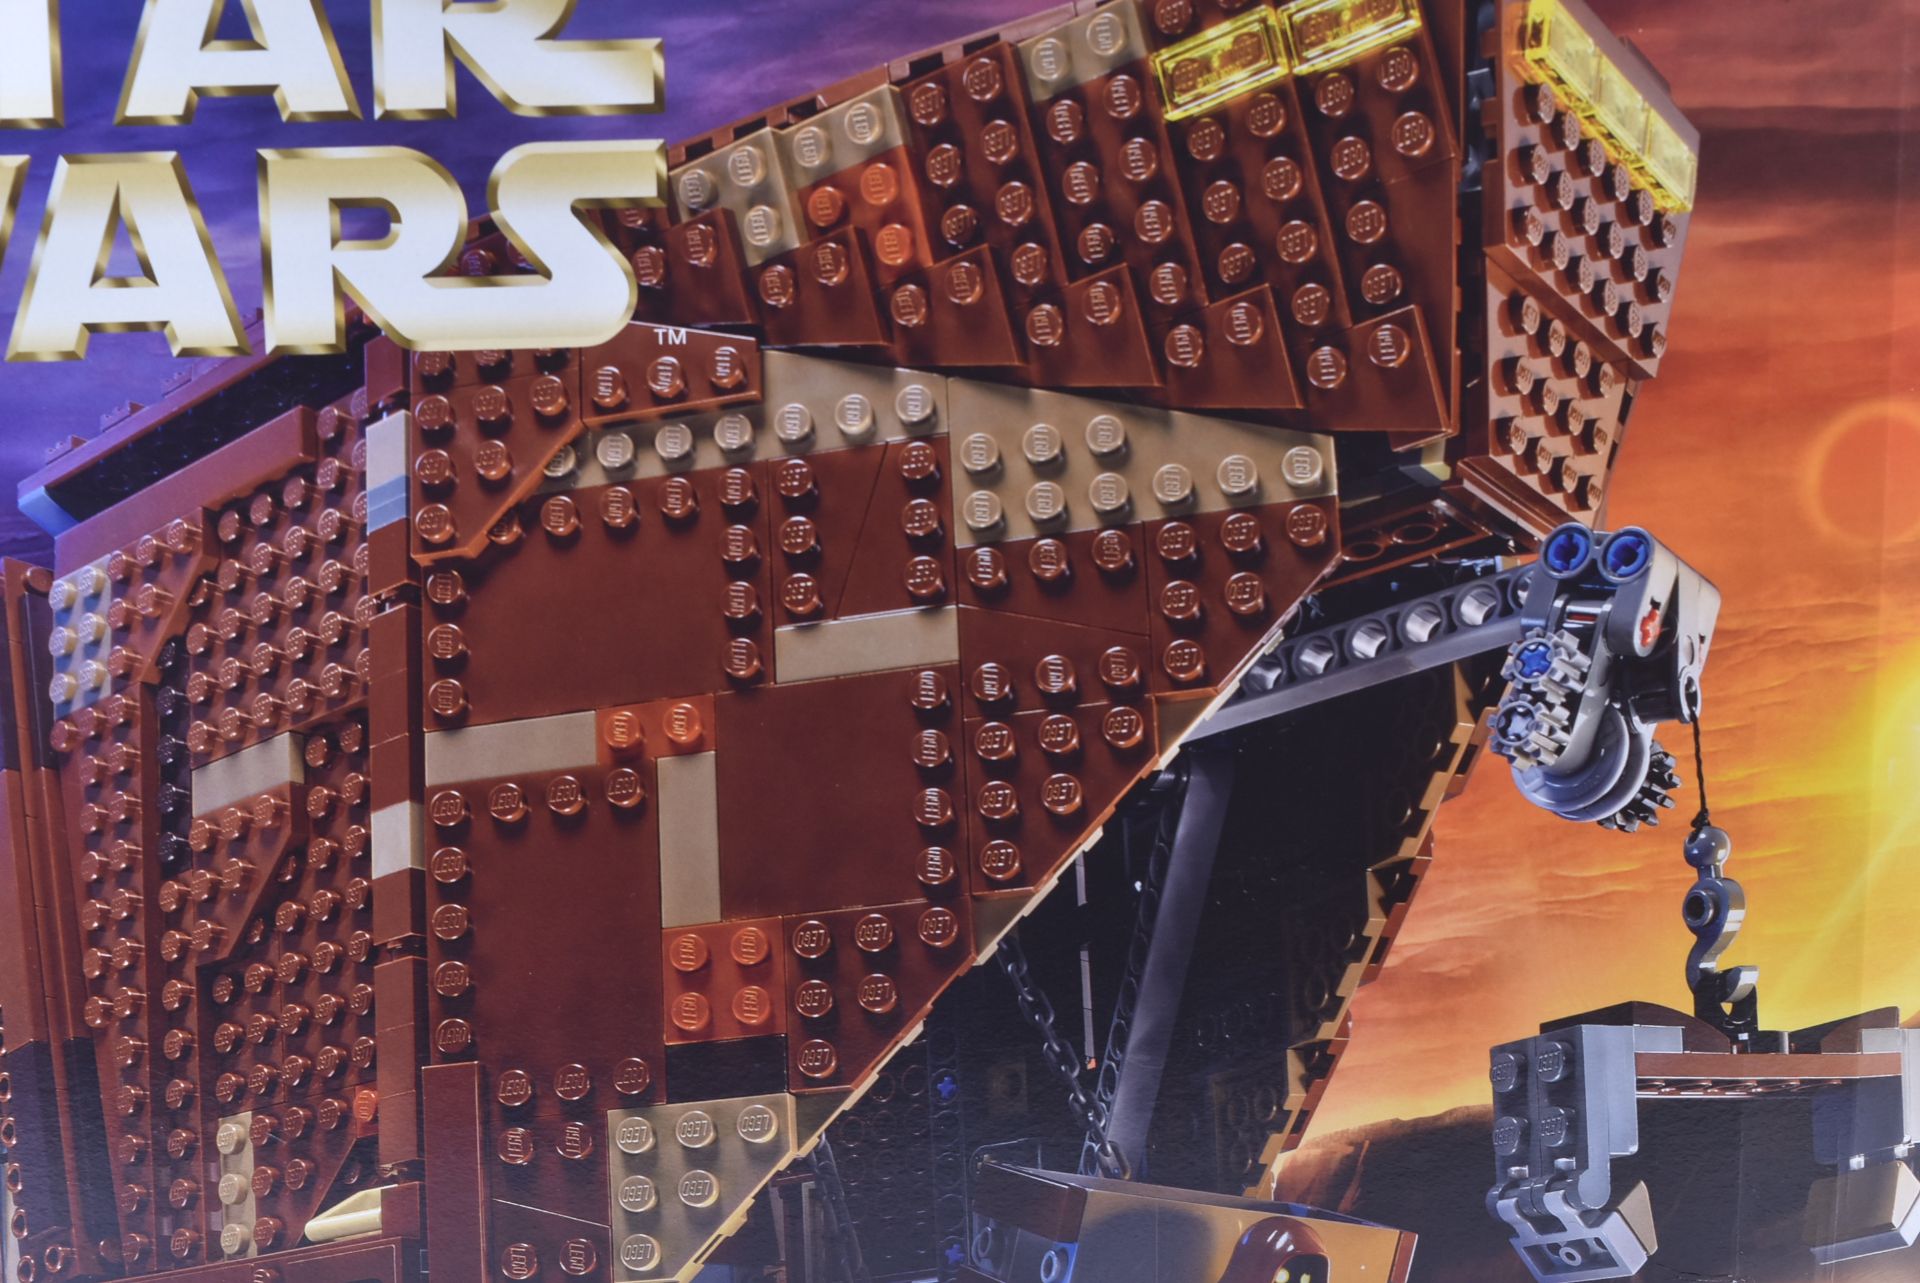 LEGO SET - STAR WARS - 75059 - SANDCRAWLER - ULTIMATE COLLECTORS EDITION - Image 2 of 5